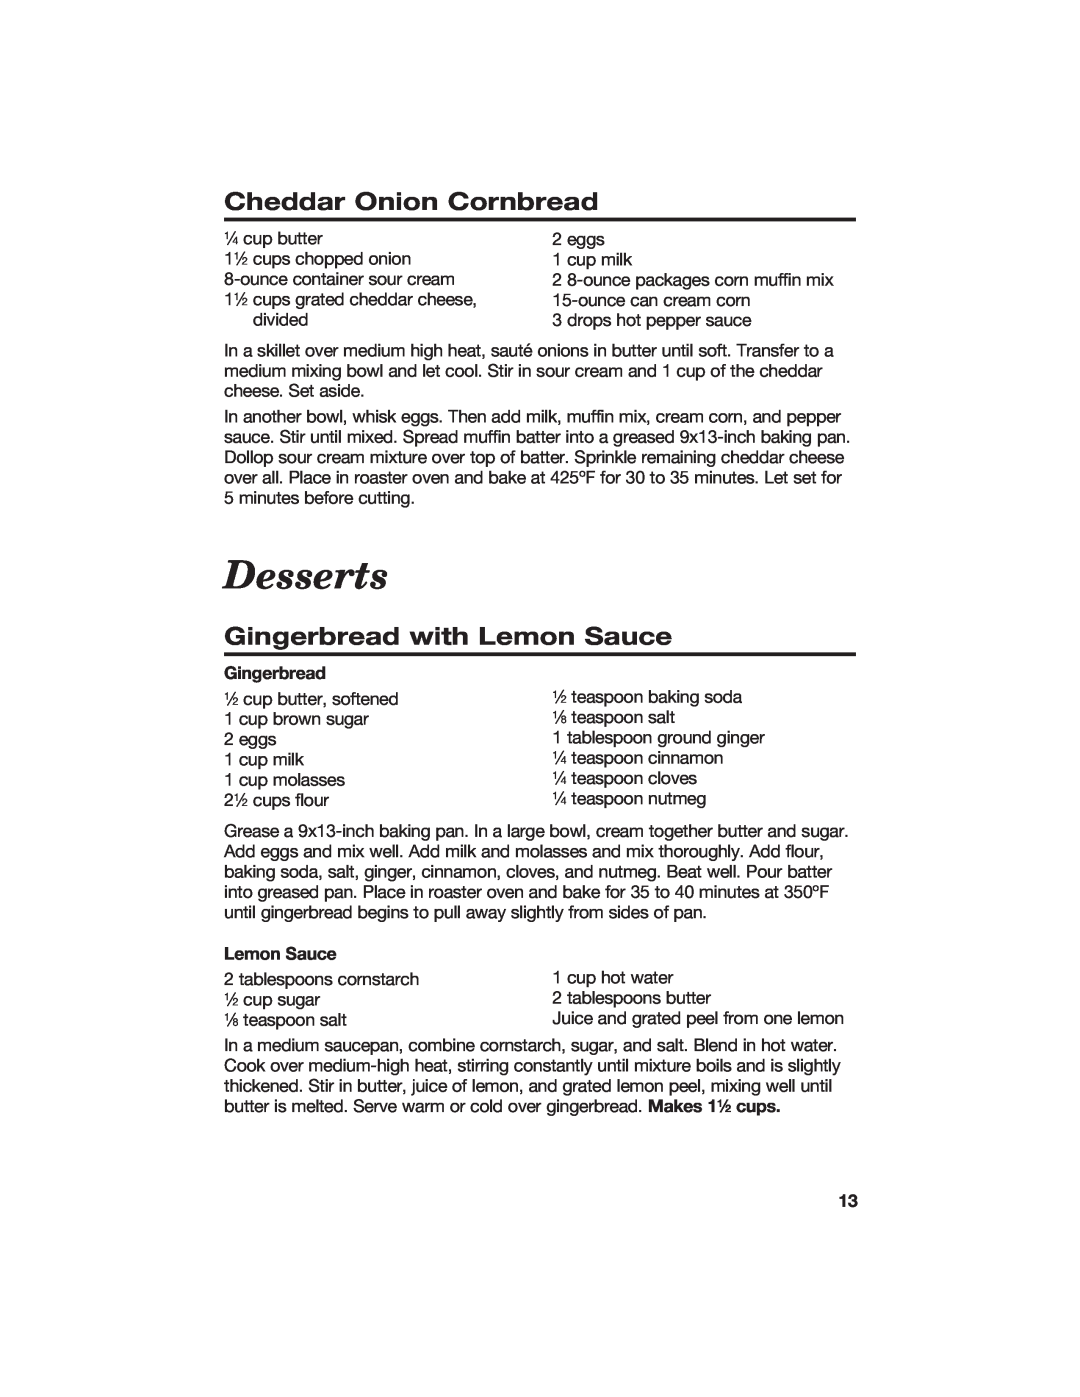 Hamilton Beach Roaster Oven manual Desserts, Cheddar Onion Cornbread, Gingerbread with Lemon Sauce 